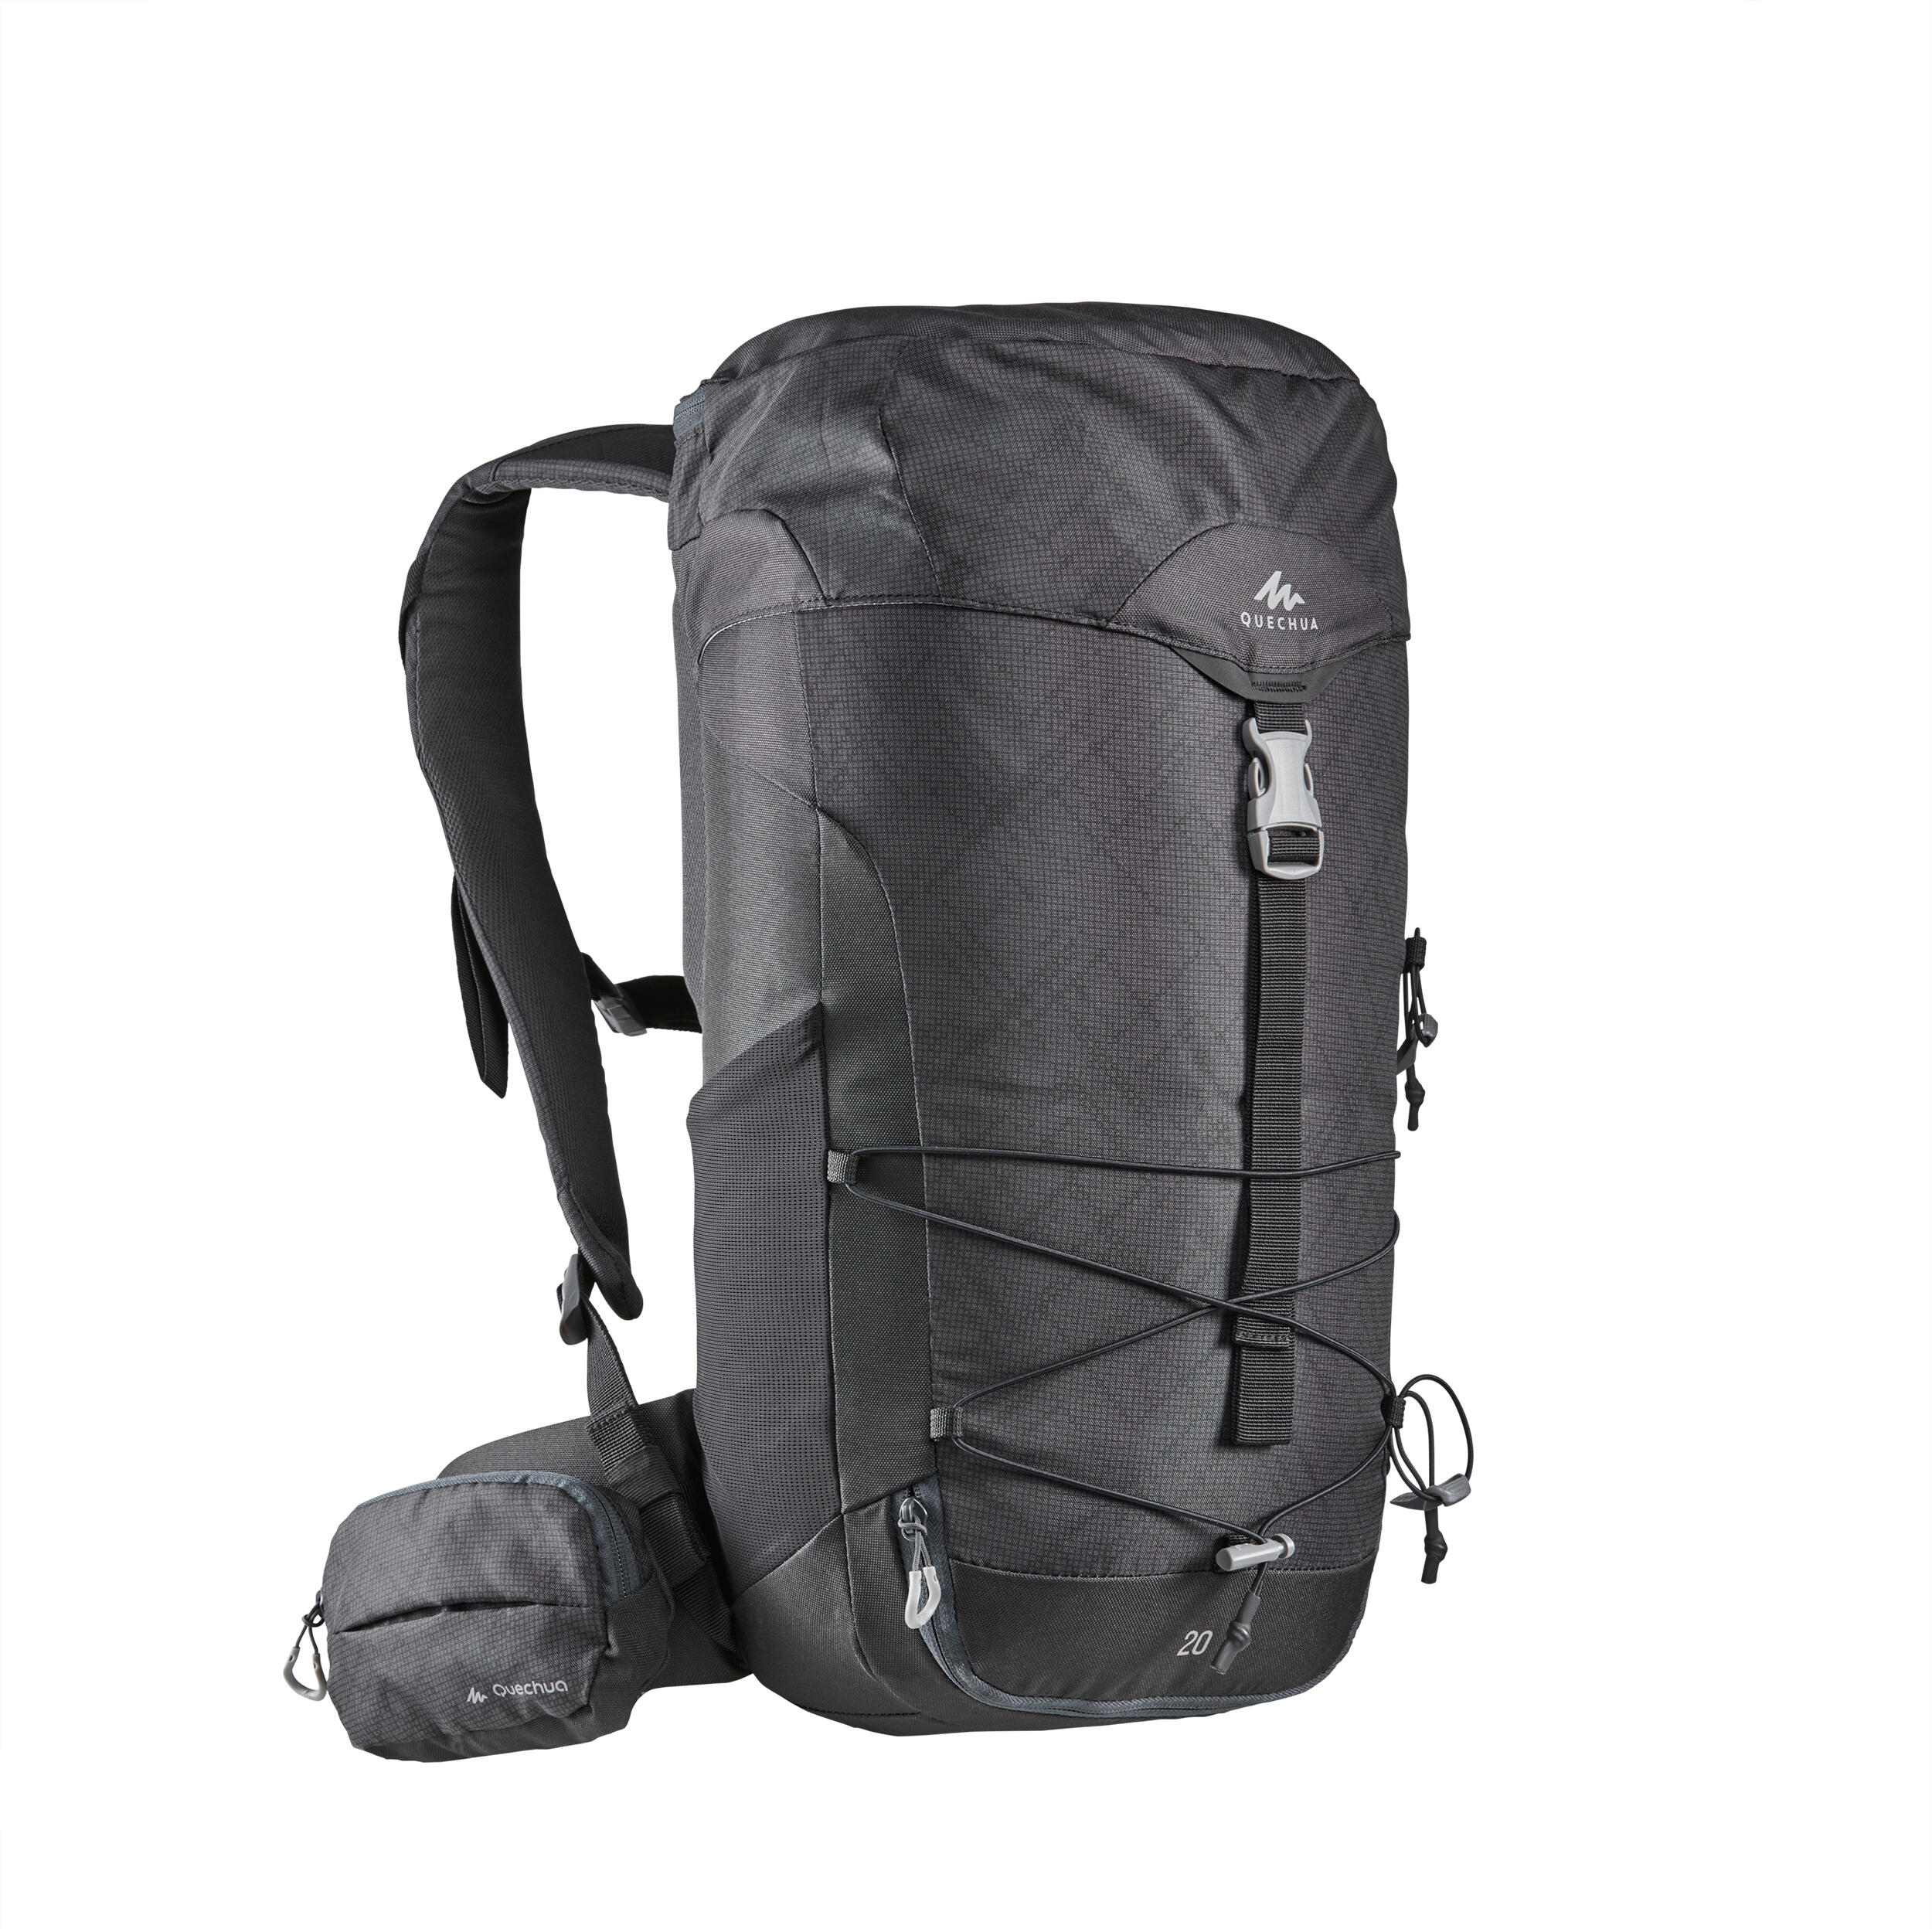 20 L Hiking Backpack - MH 100 Black - QUECHUA